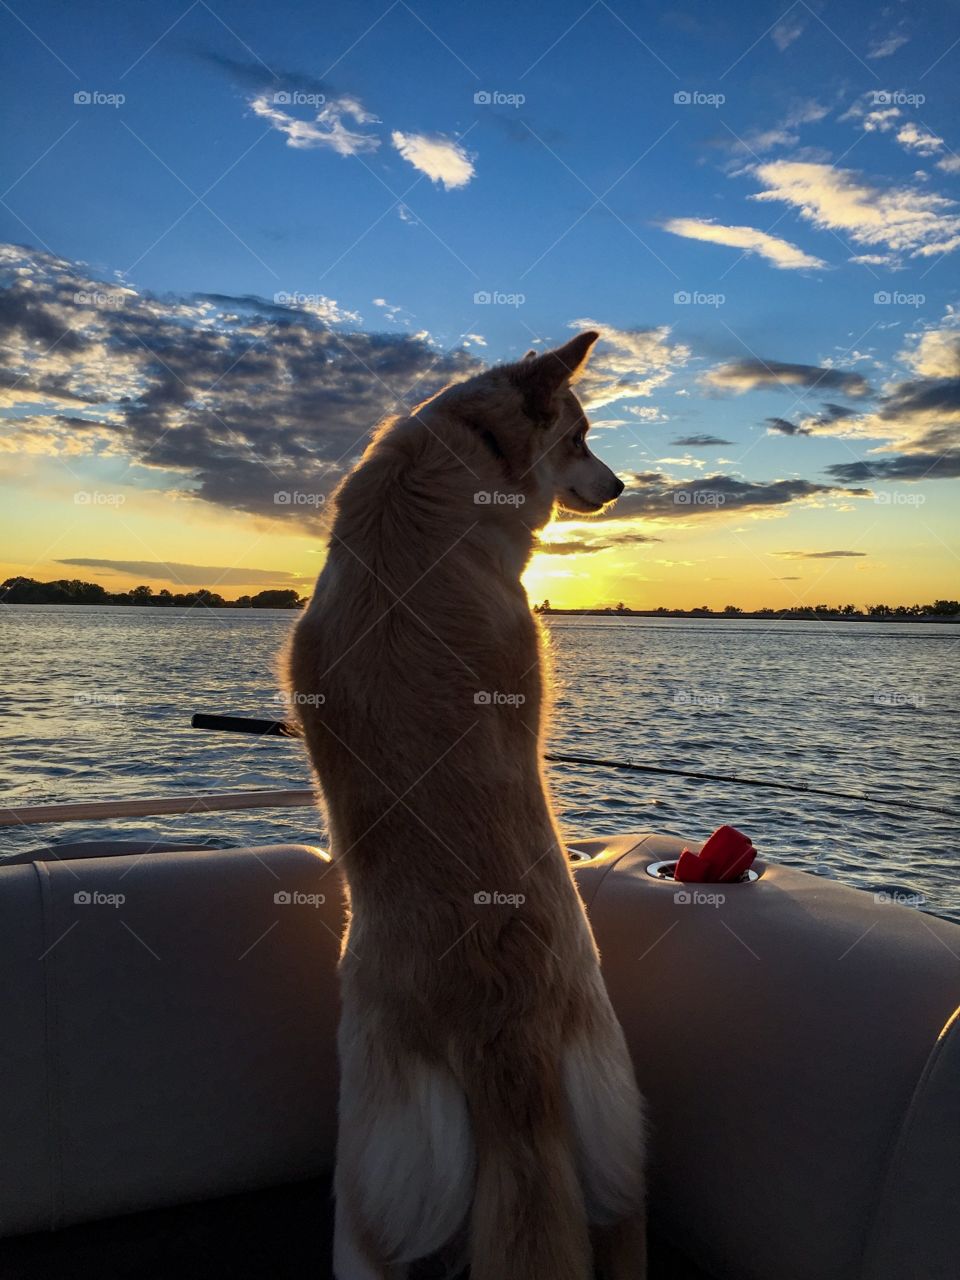 Dog, boat, sunset, lake = happiness 